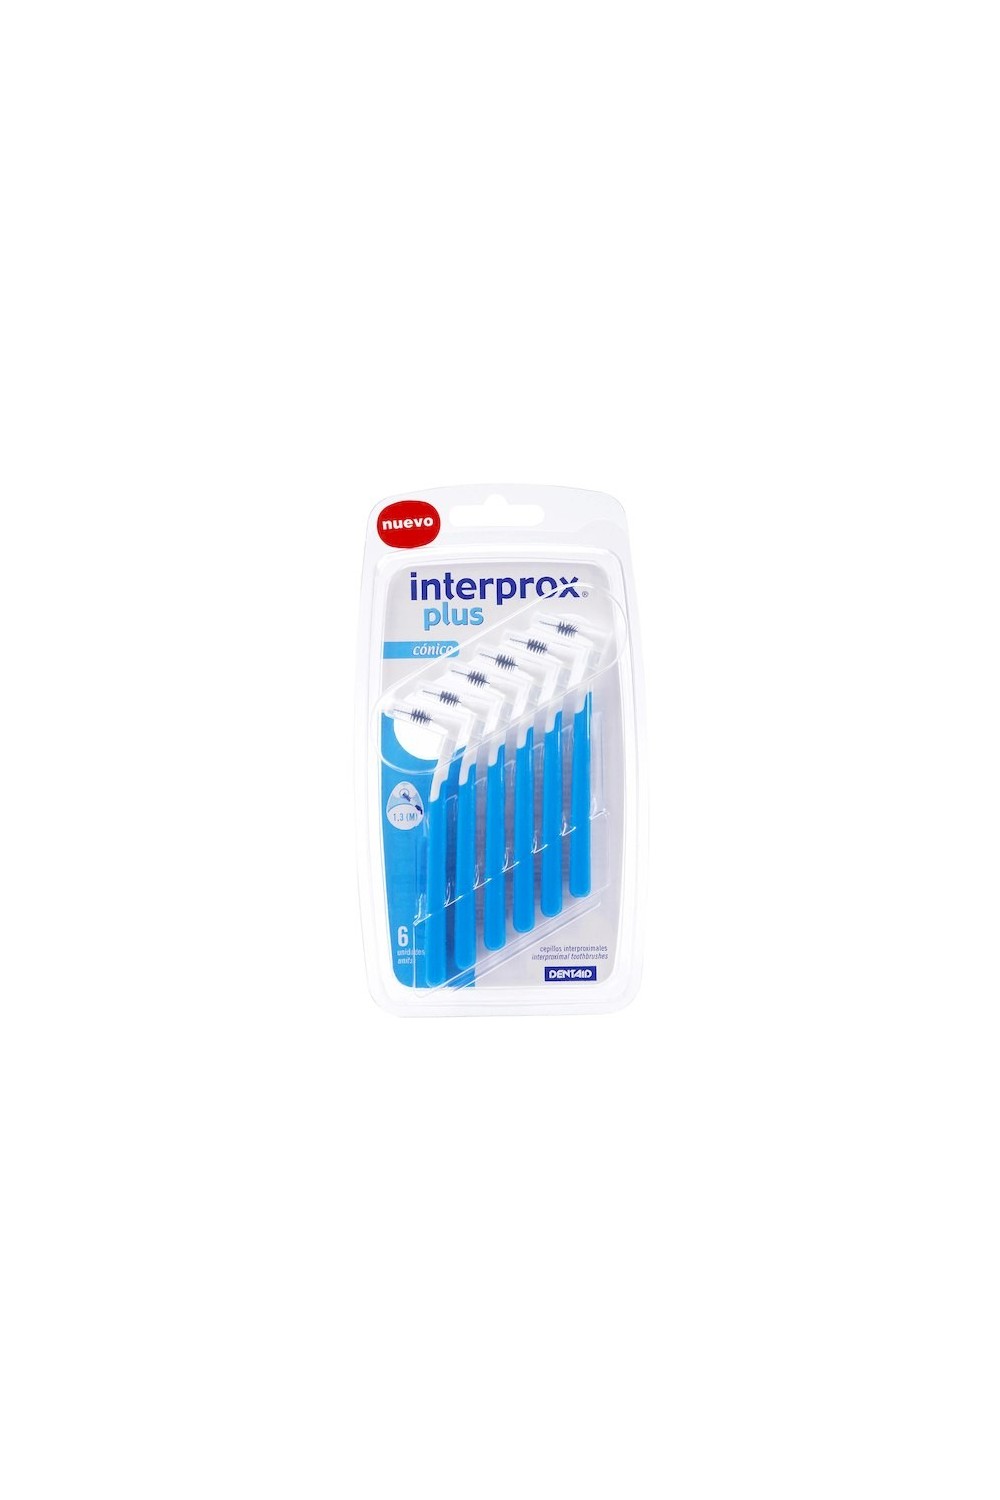 interprox Plus Conical 6 Units